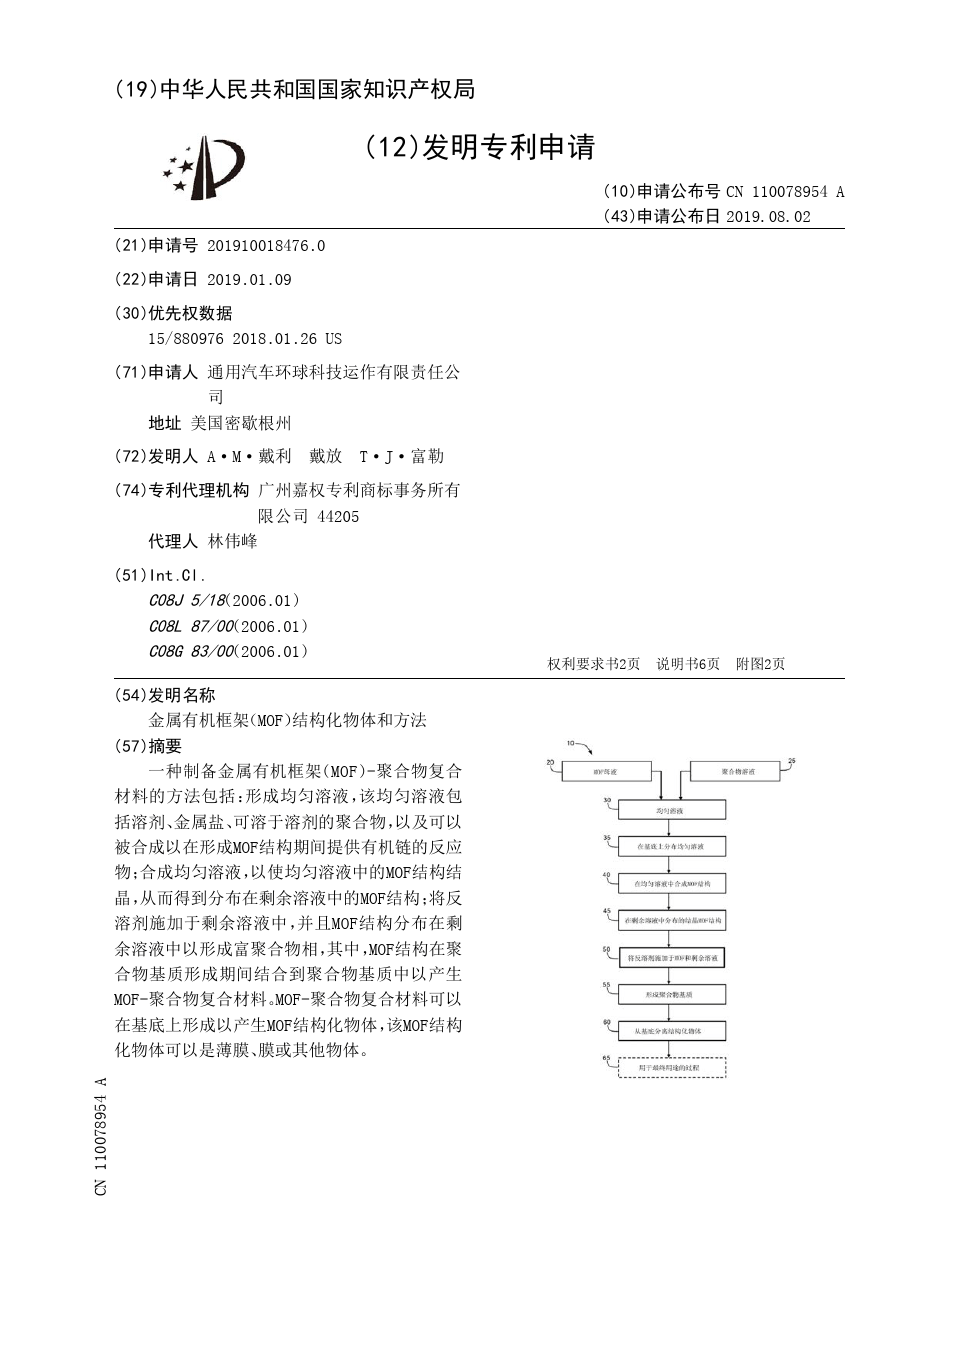 【CN110078954A】金属有机框架MOF结构化物体和方法【专利】